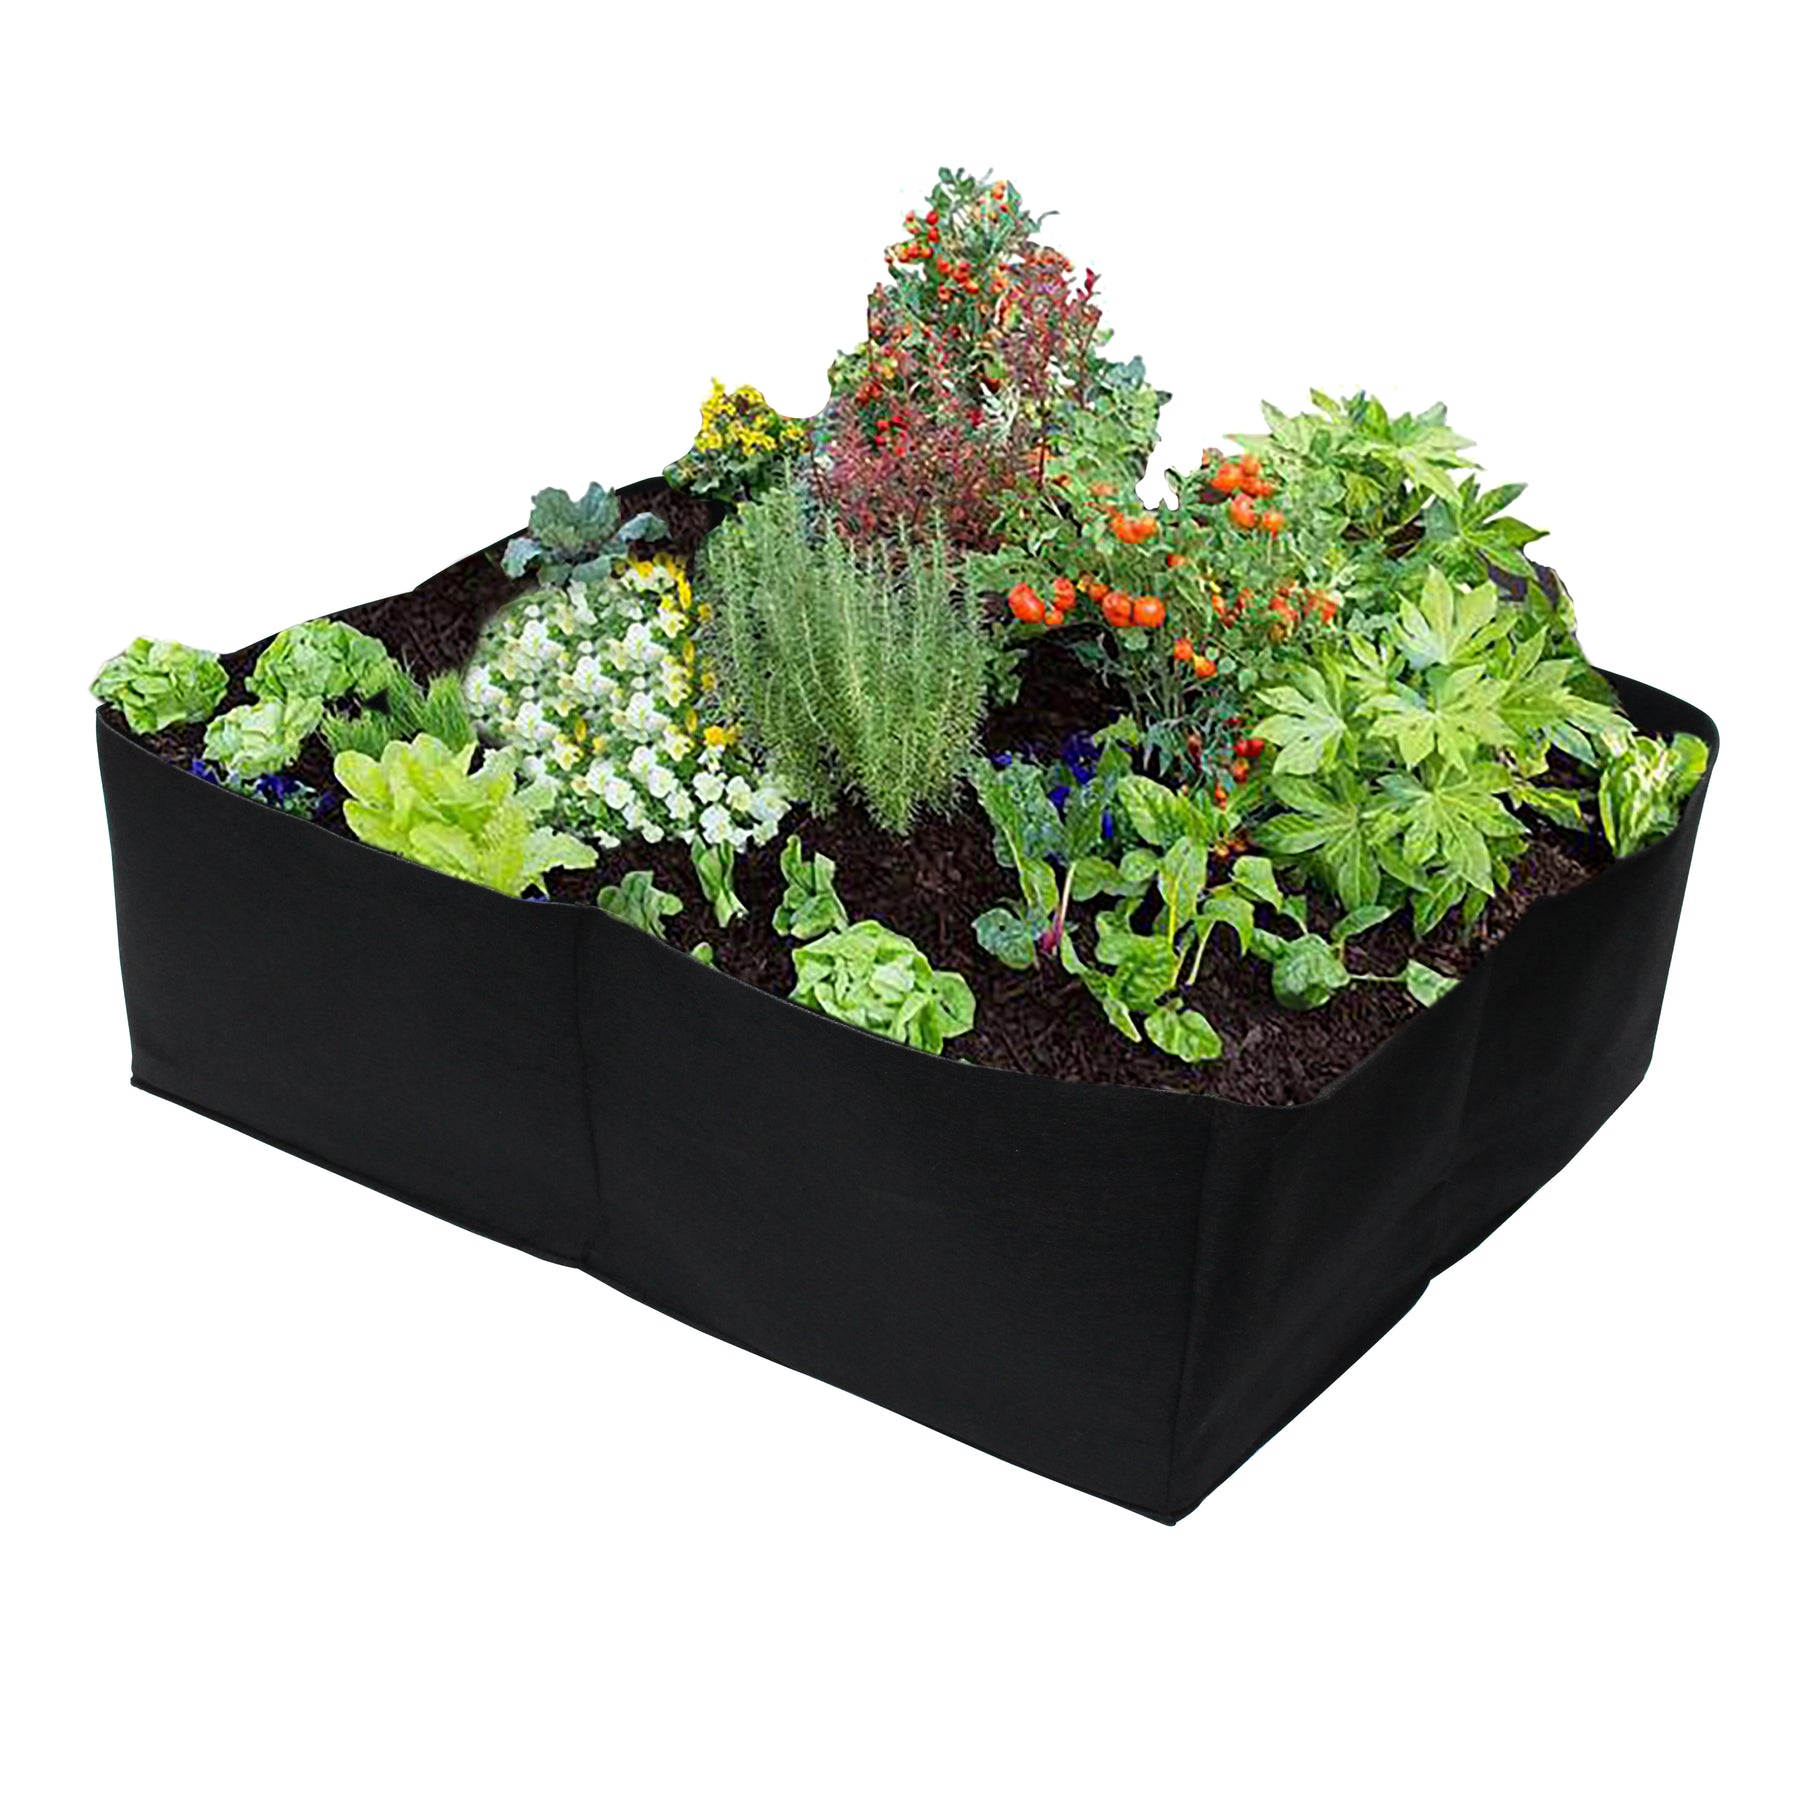 19mm² Green Garden & Plant Mesh - Mesh & Netting - Garden Health